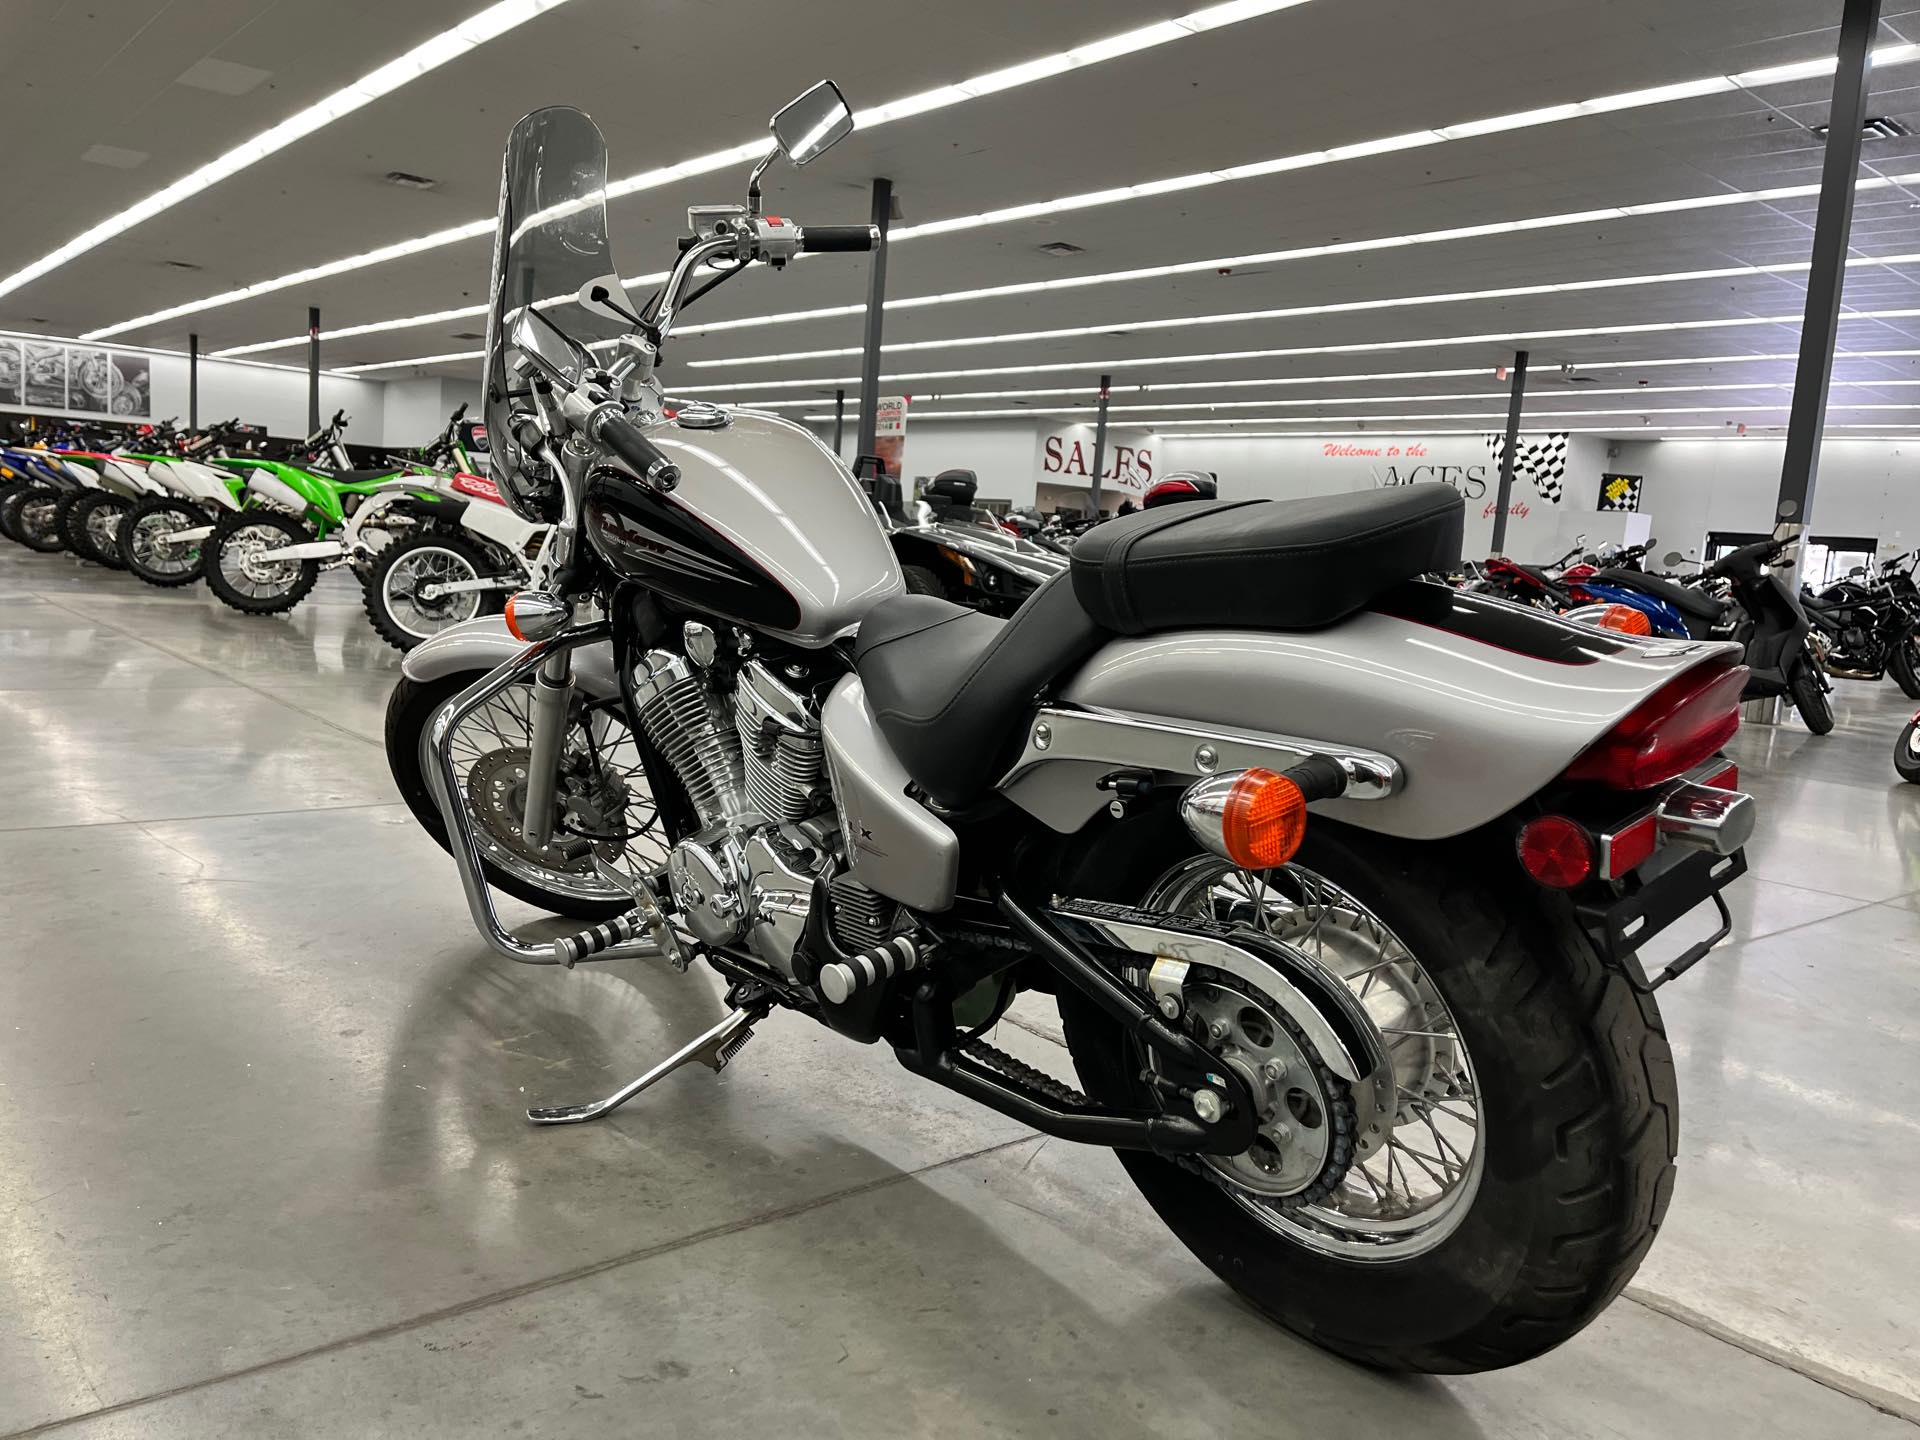 2000 HONDA VT600 at Aces Motorcycles - Denver